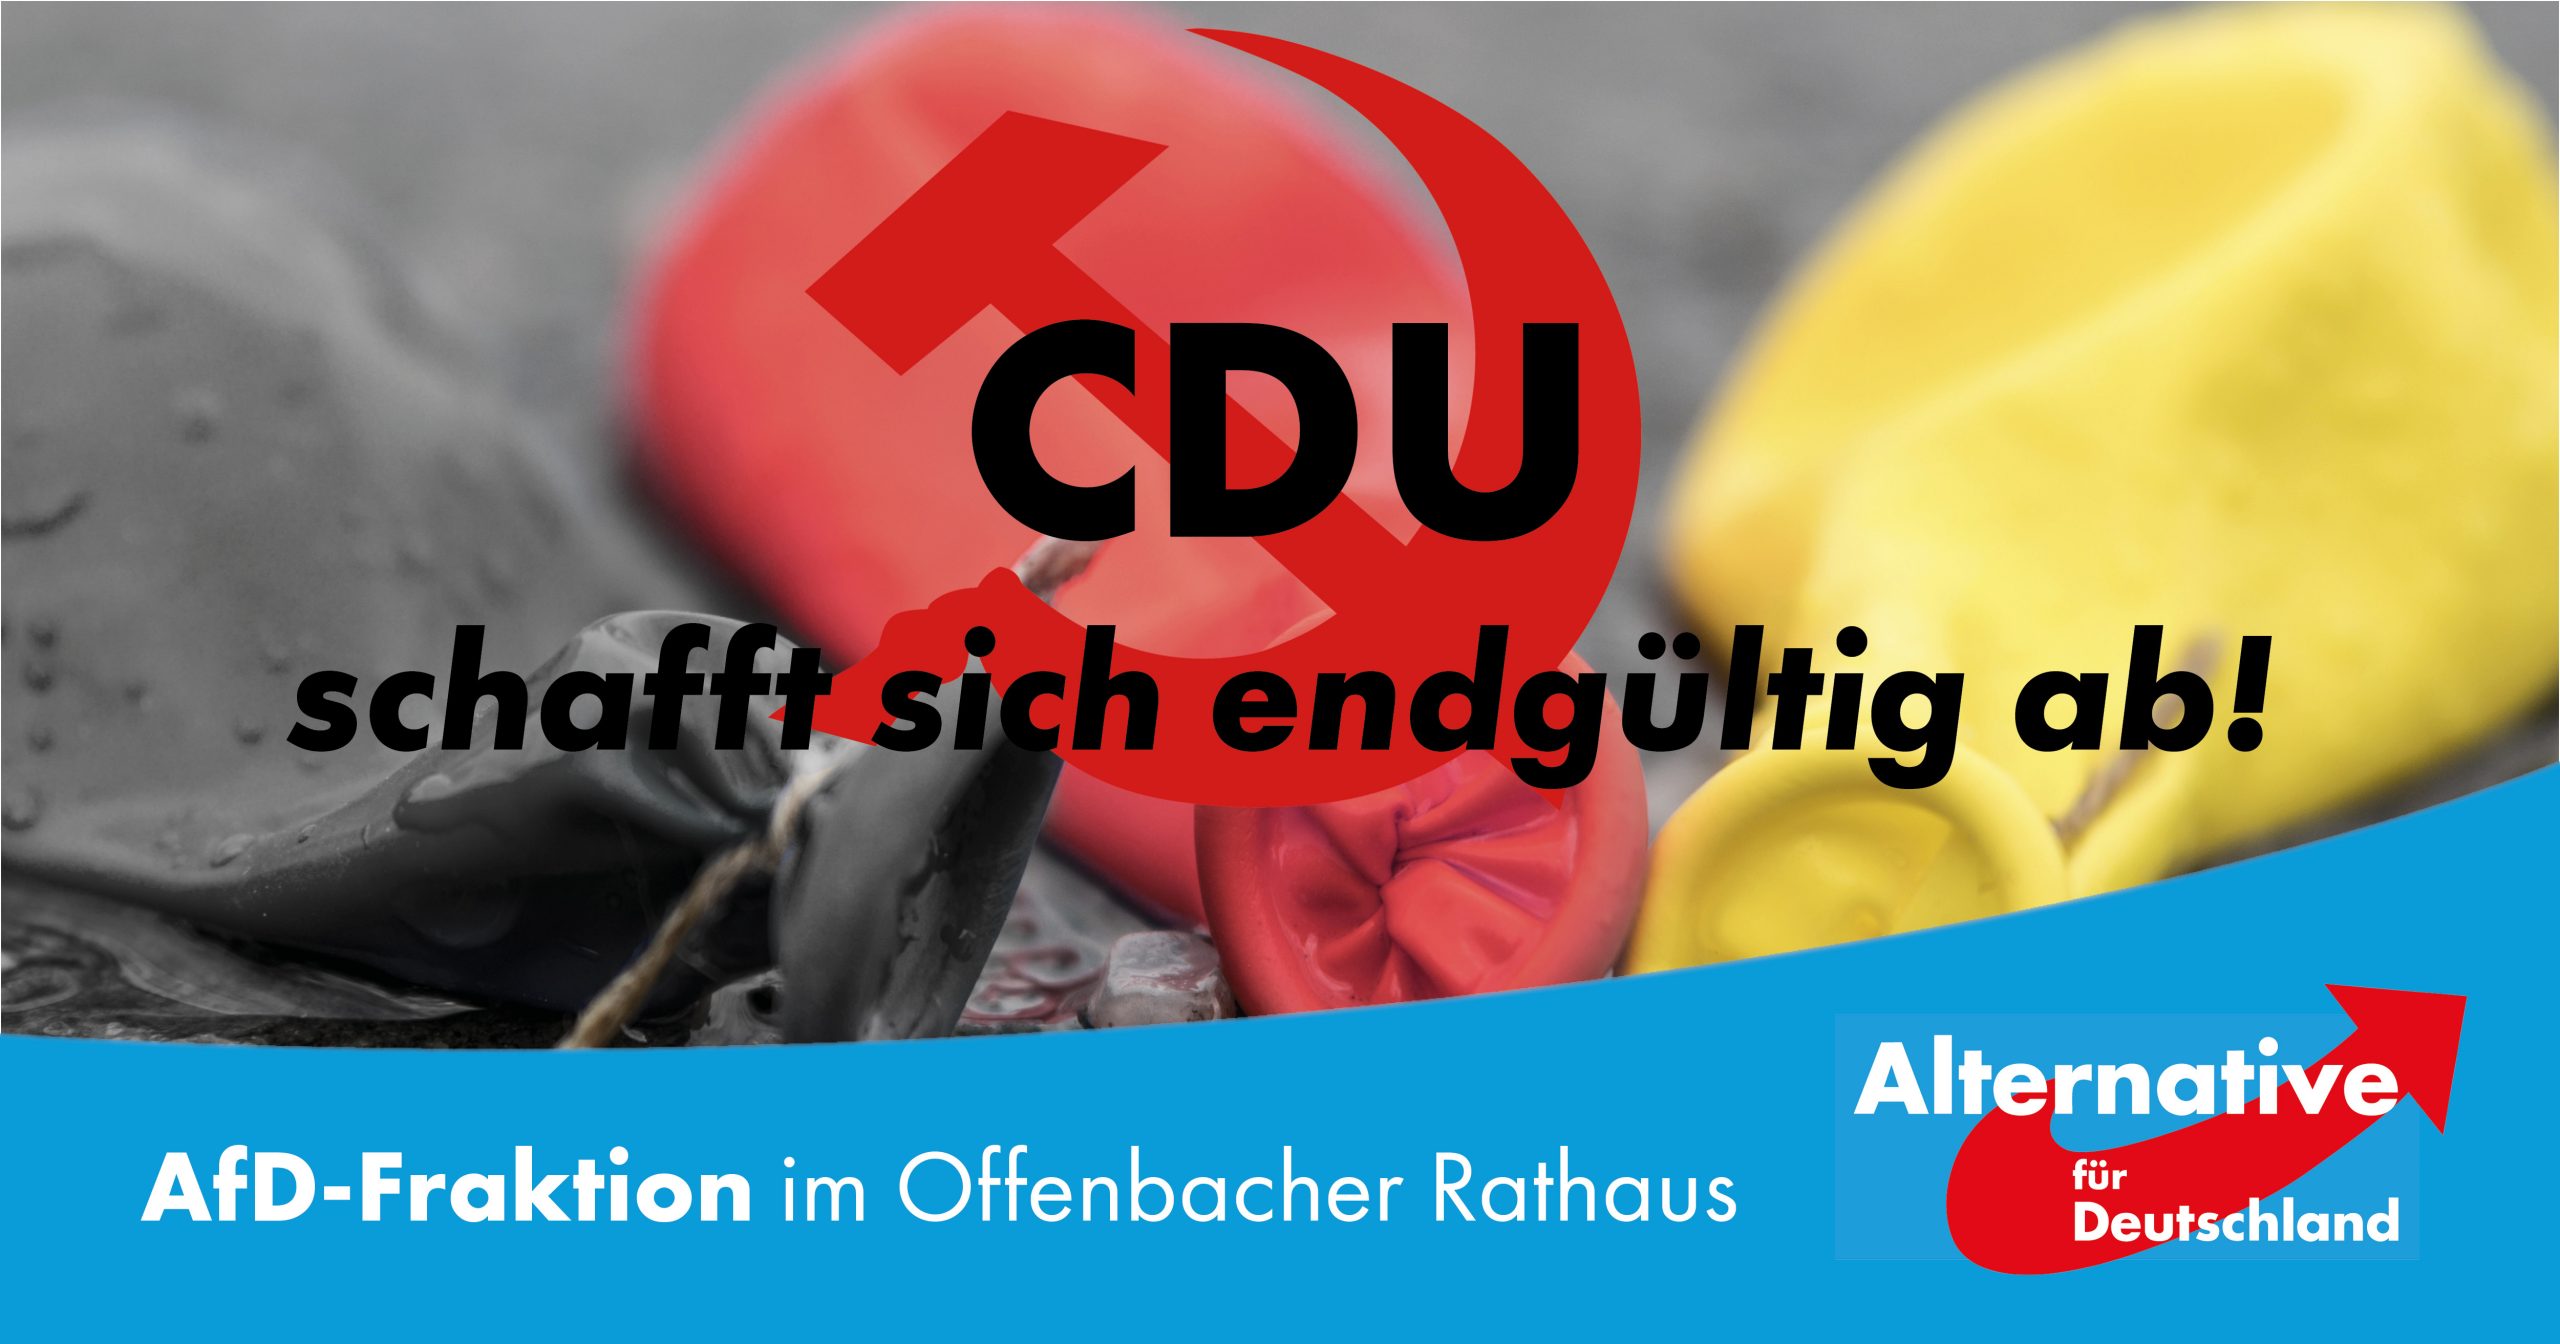 Read more about the article CDU schafft sich endgültig ab!